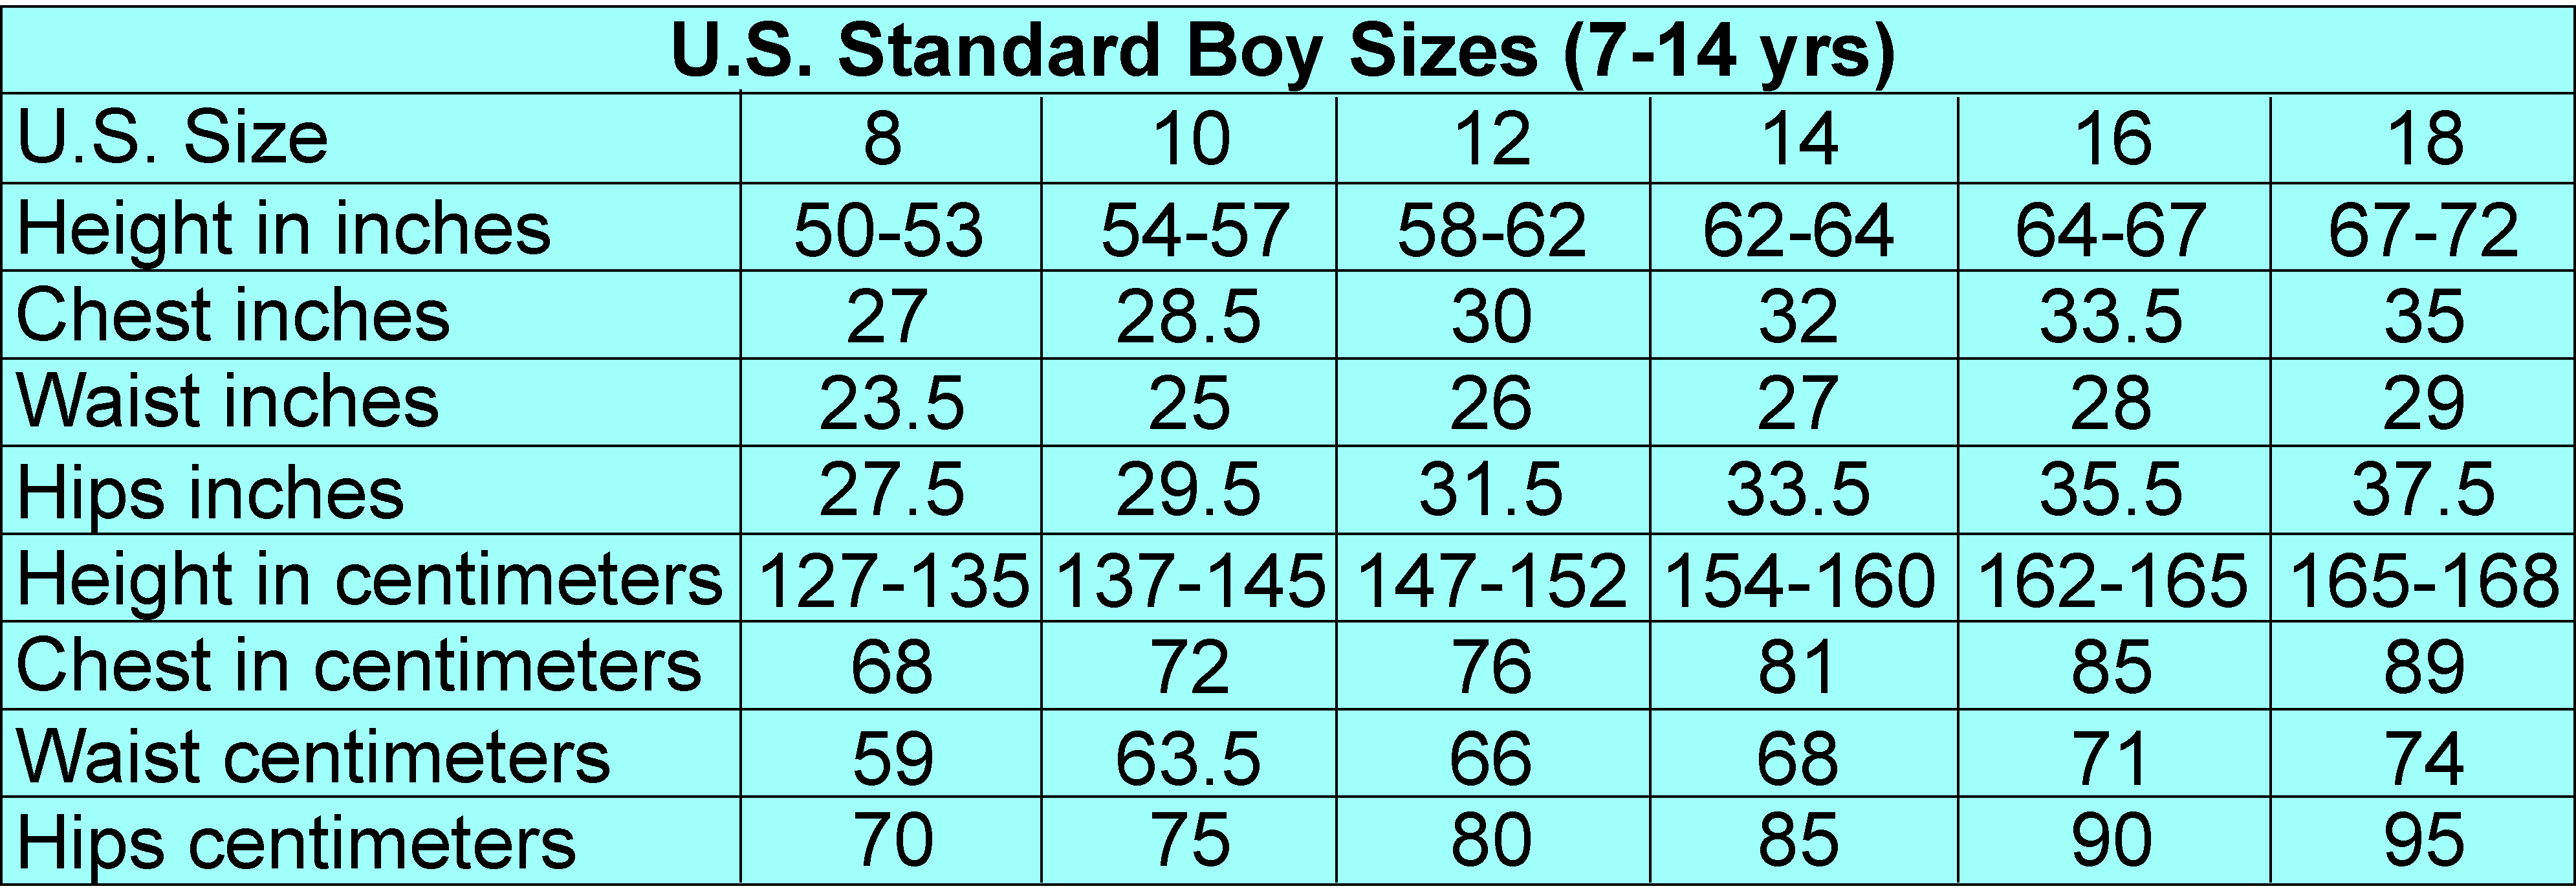 Boys U.S standard size chart